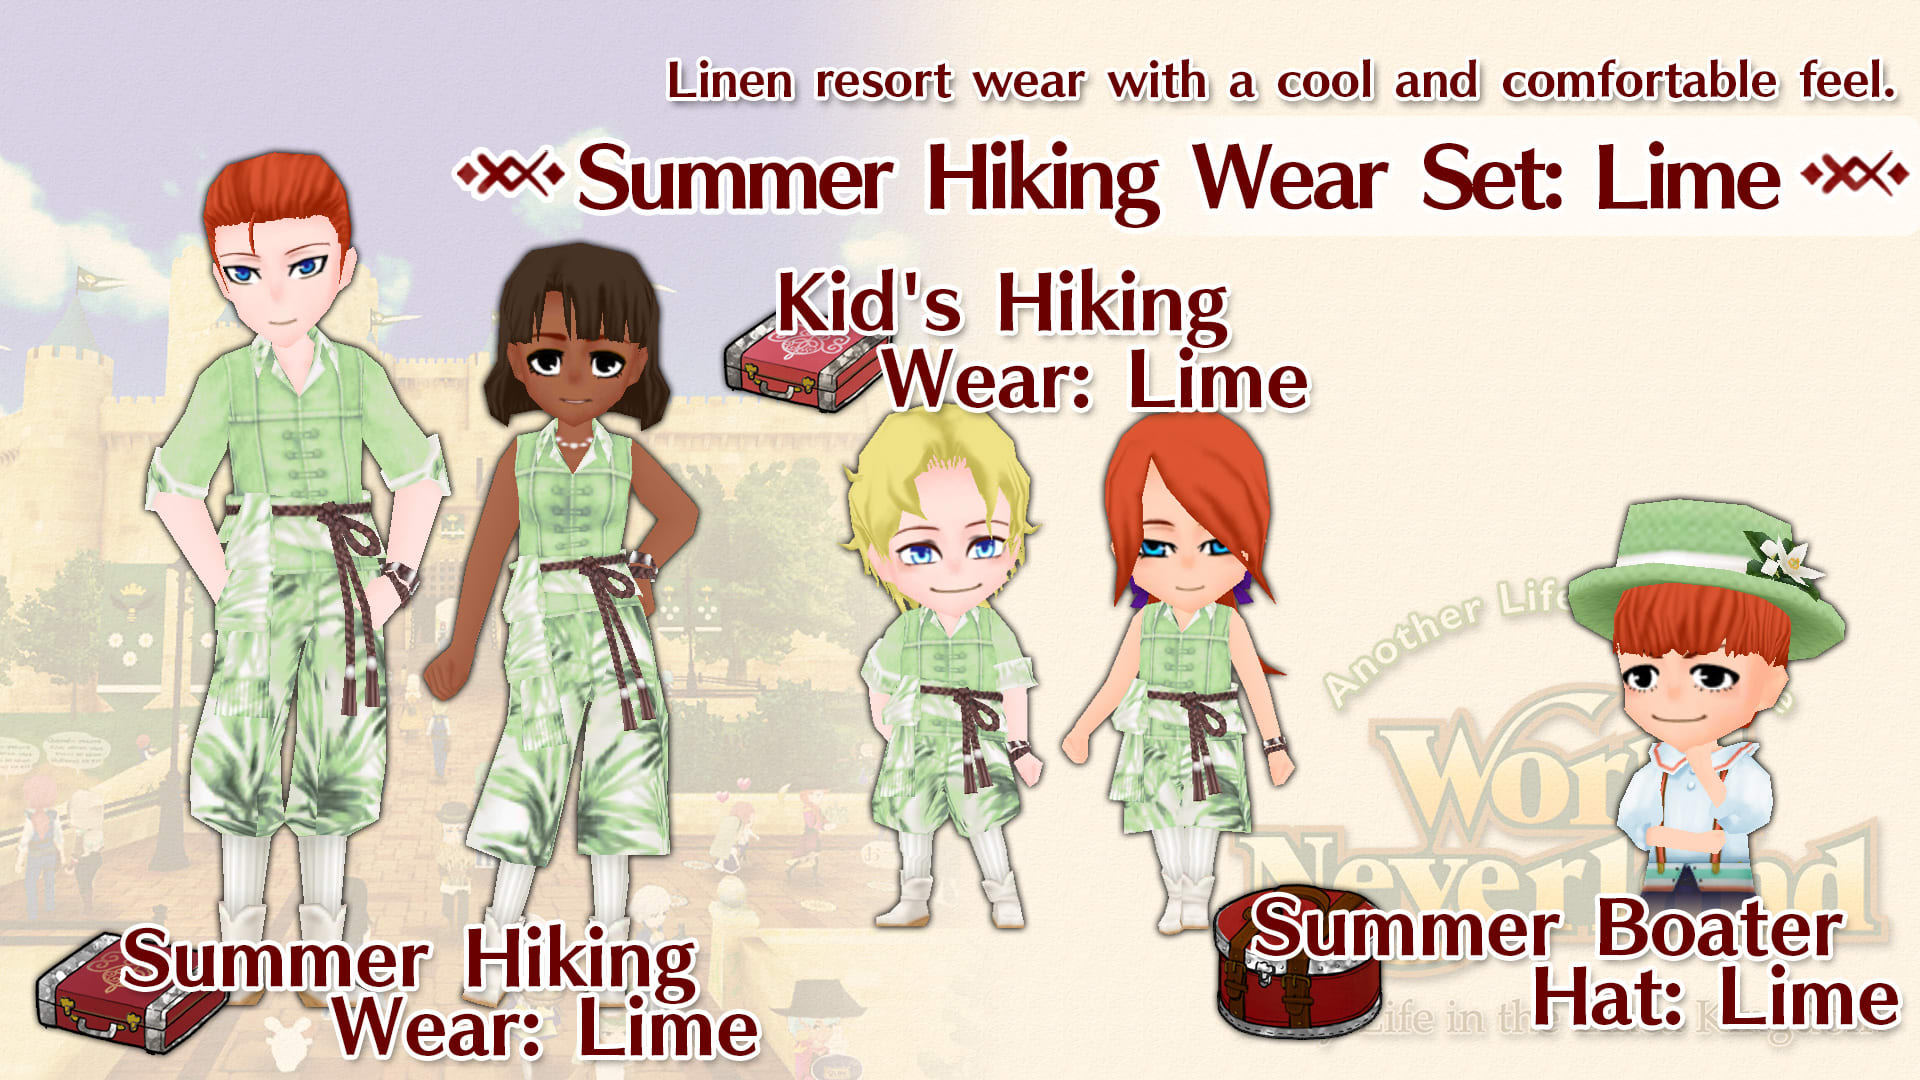 Summer Hiking Wear Set: Lime